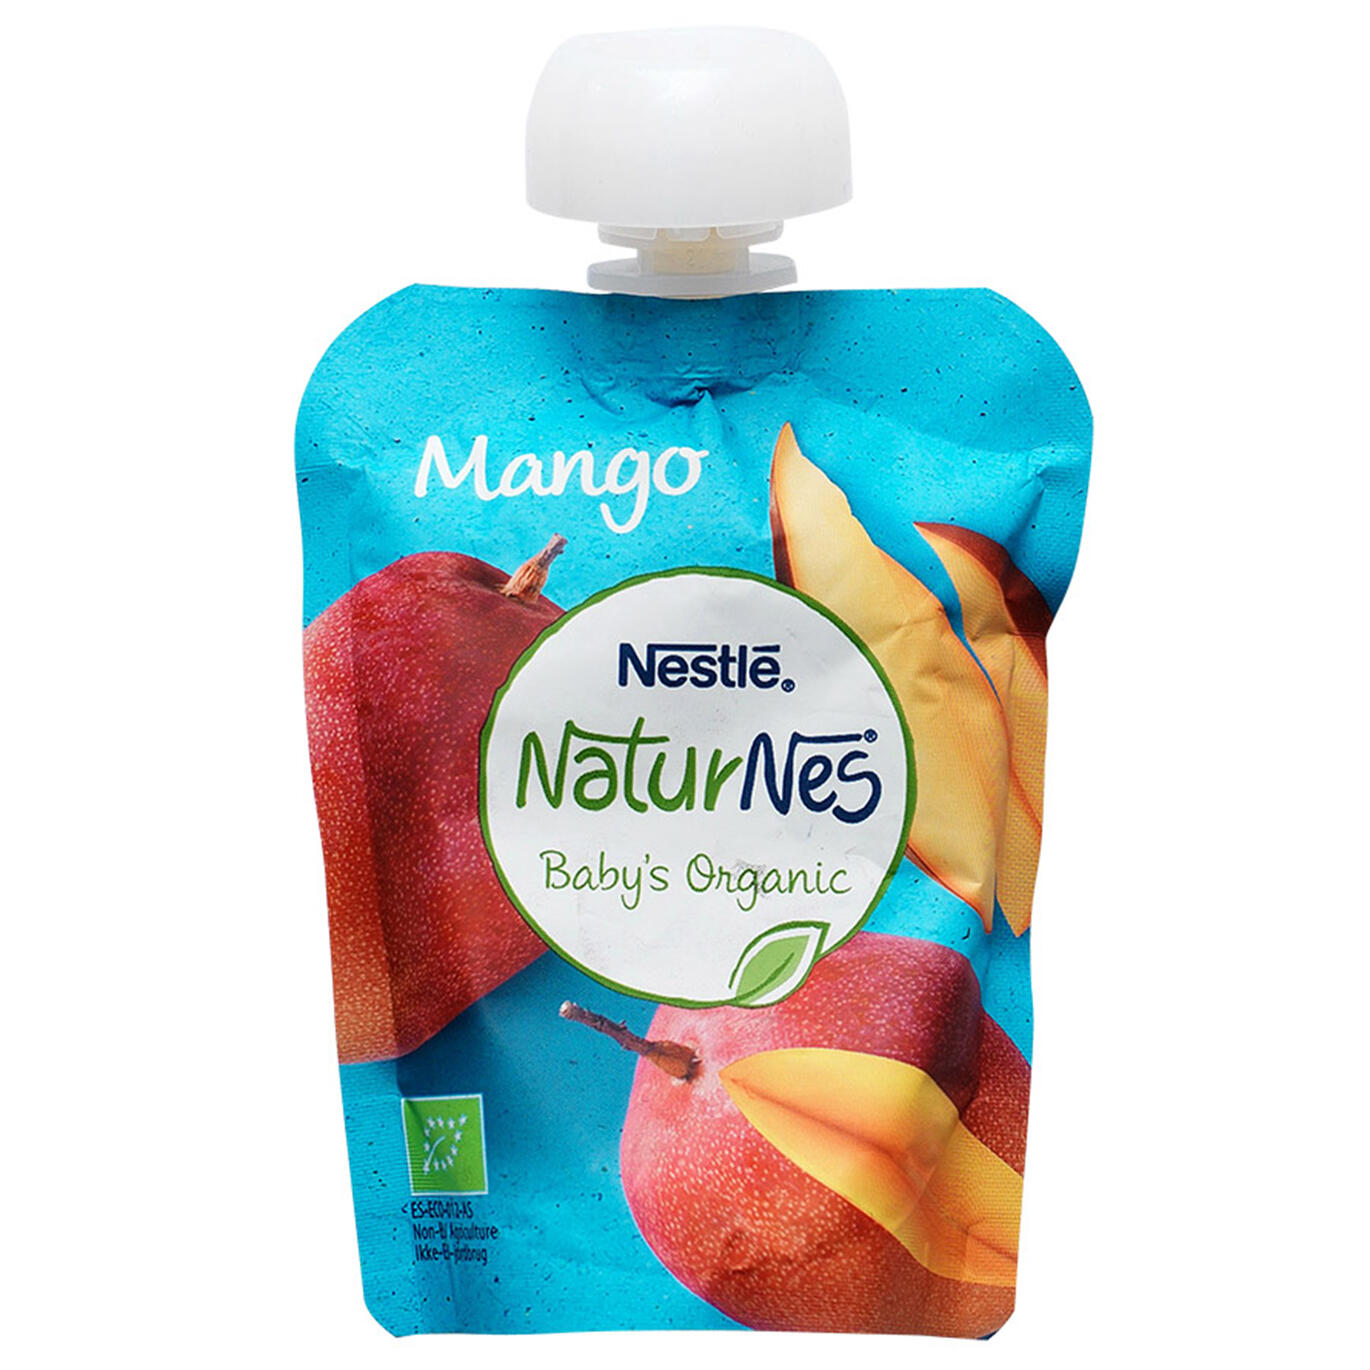 Mango Nestlé NaturNes Baby's Organic